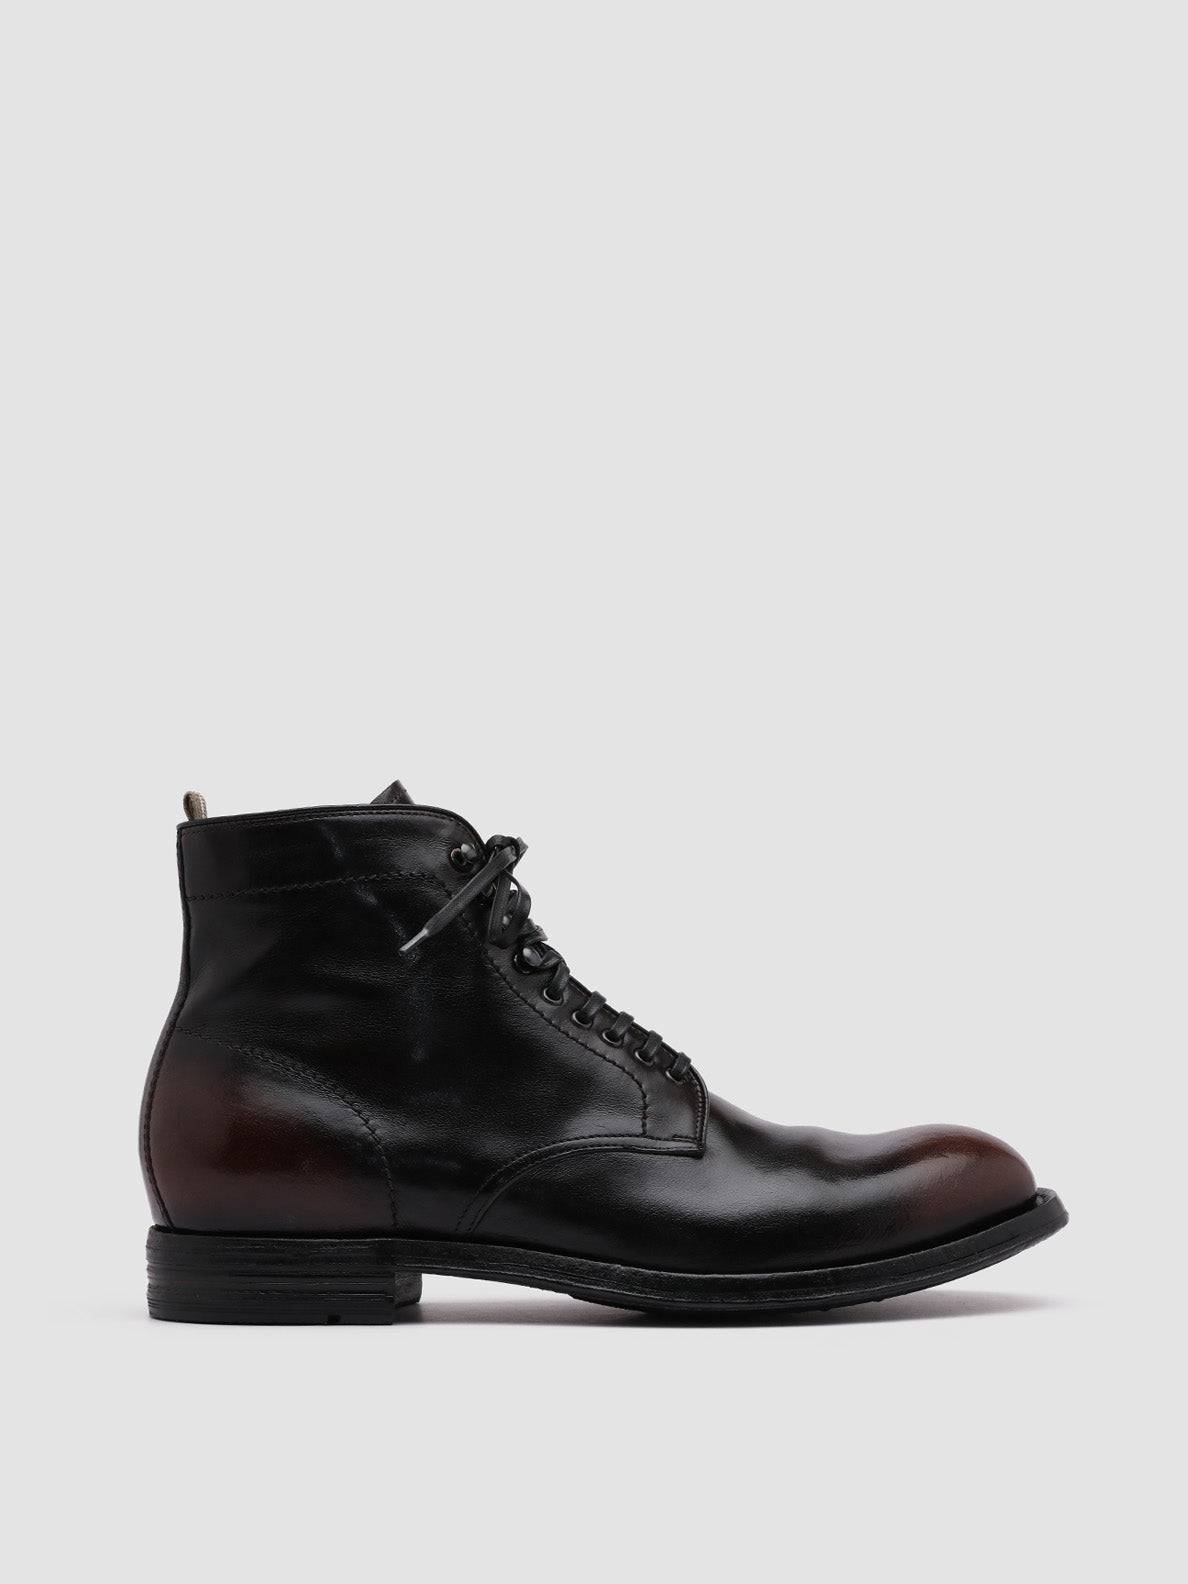 Mens Black Leather Boots BALANCE 003